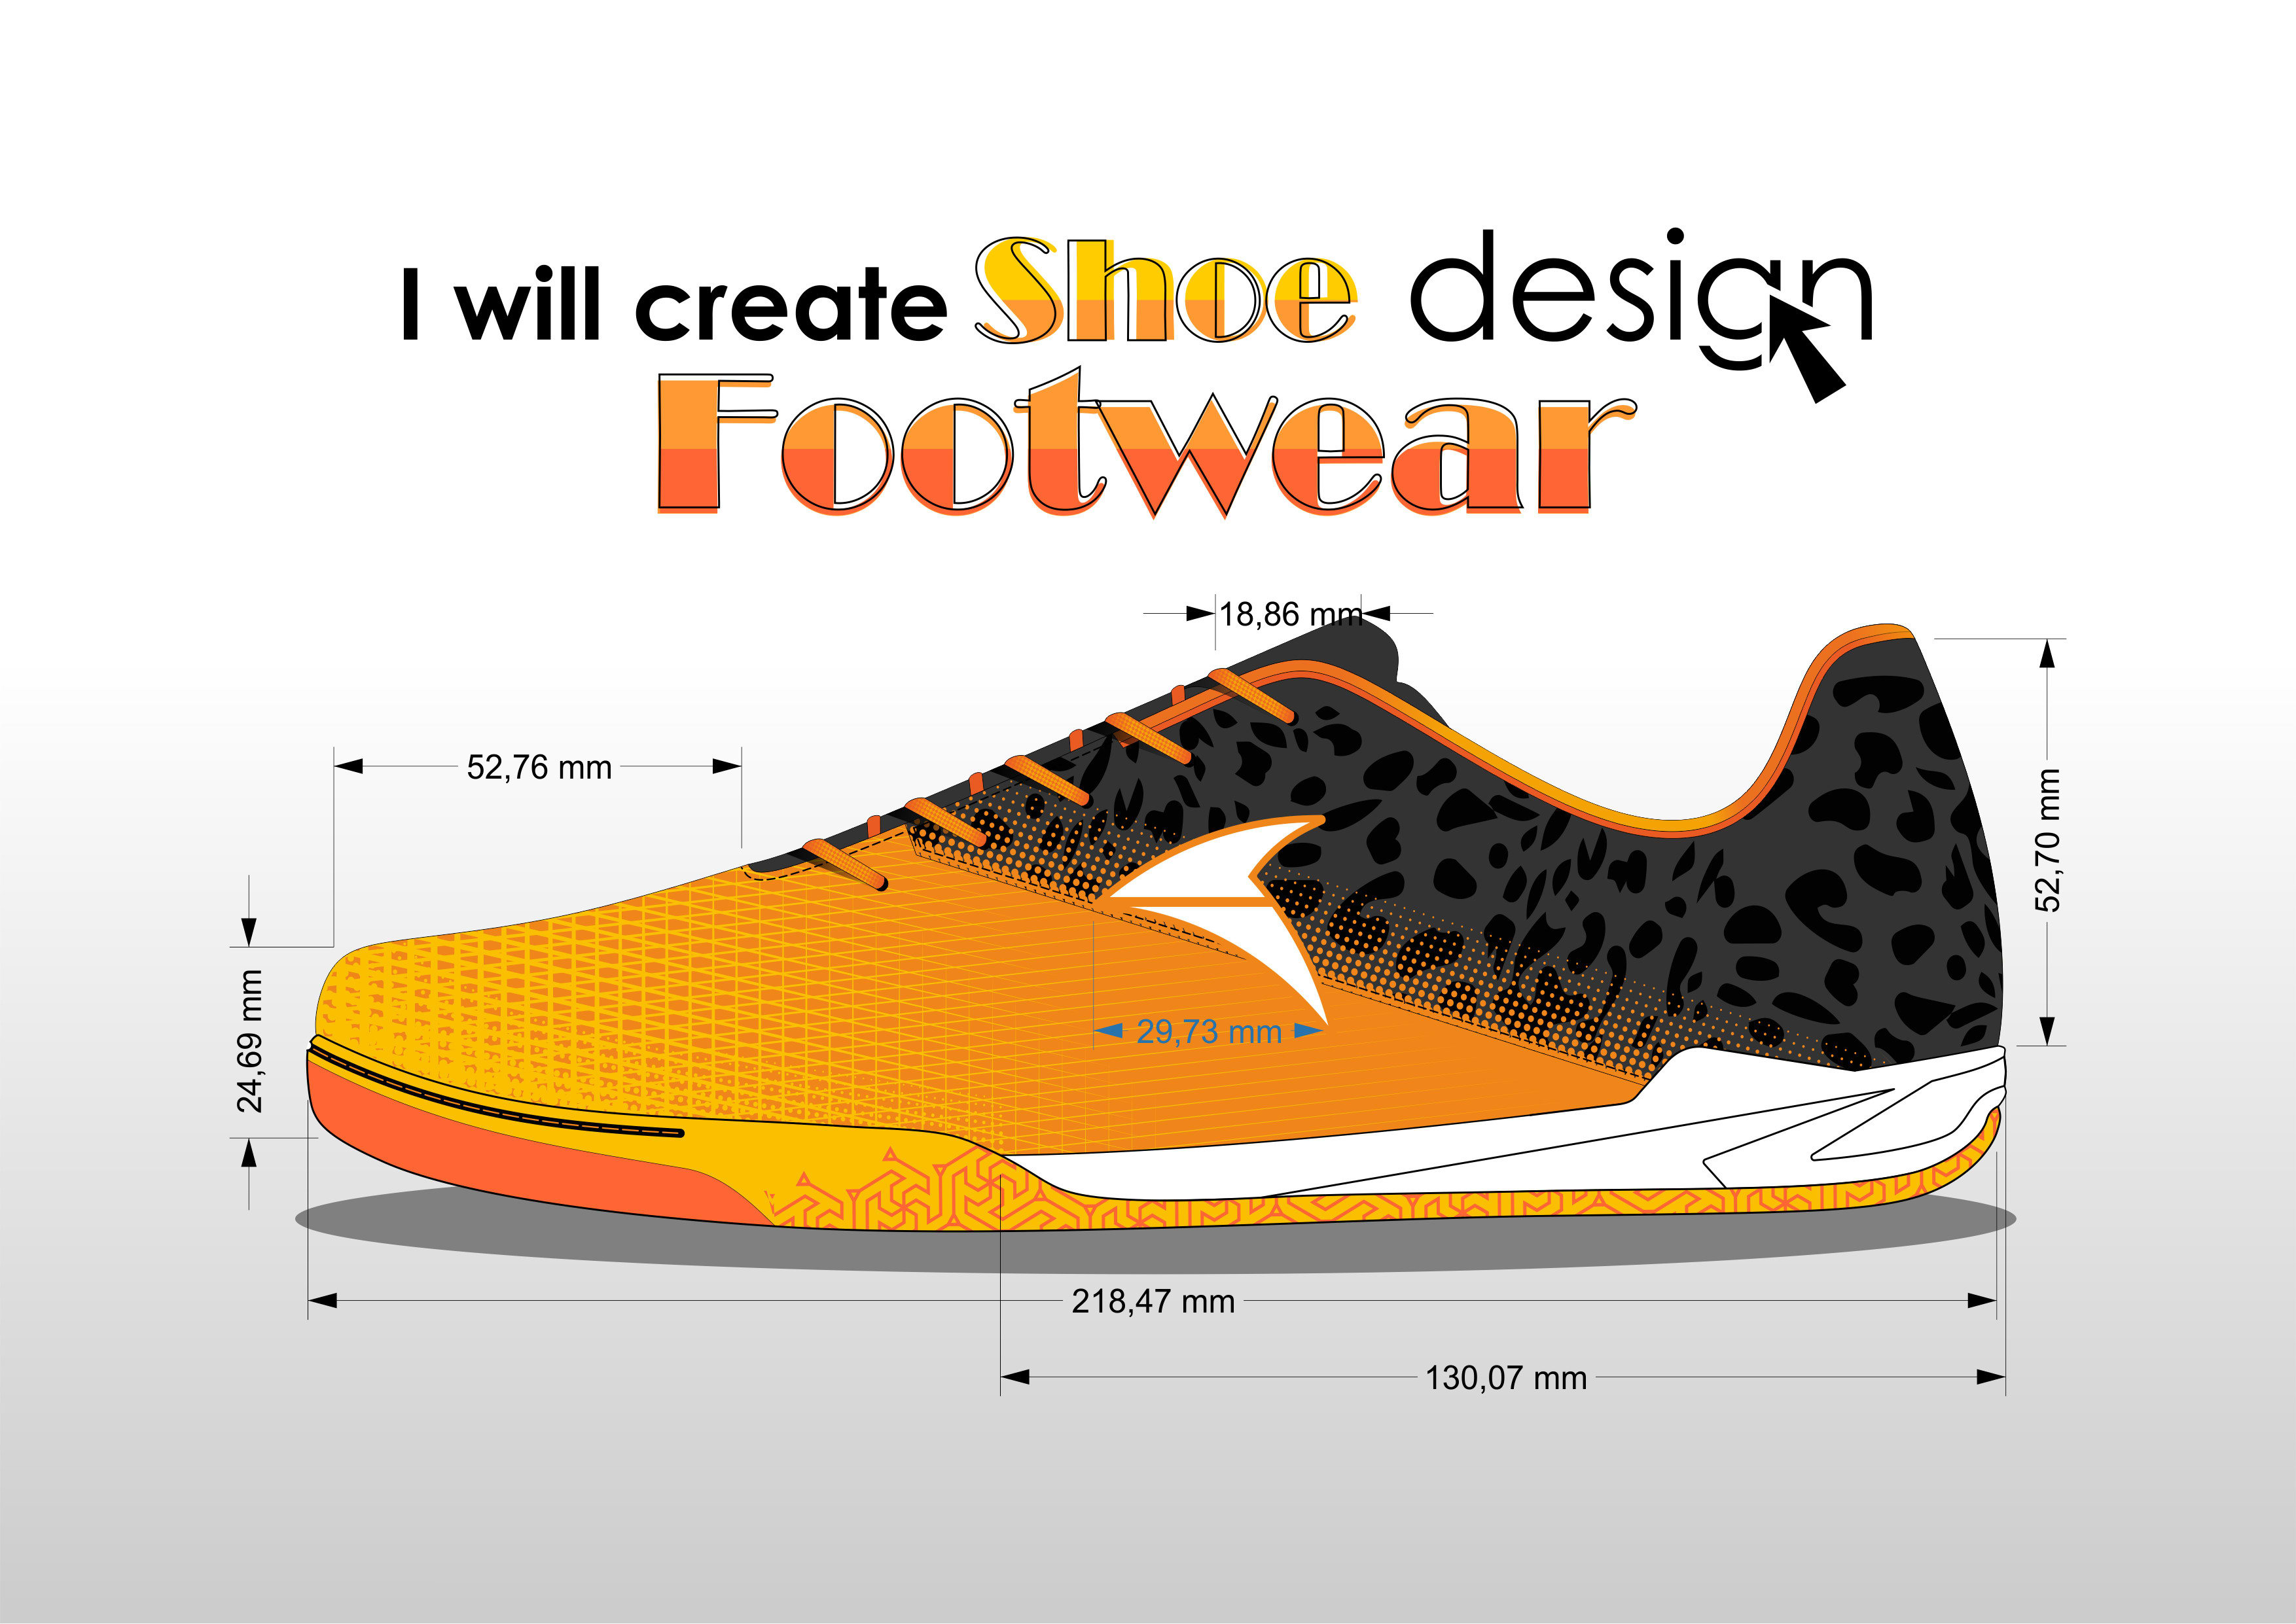 new footwear design 218